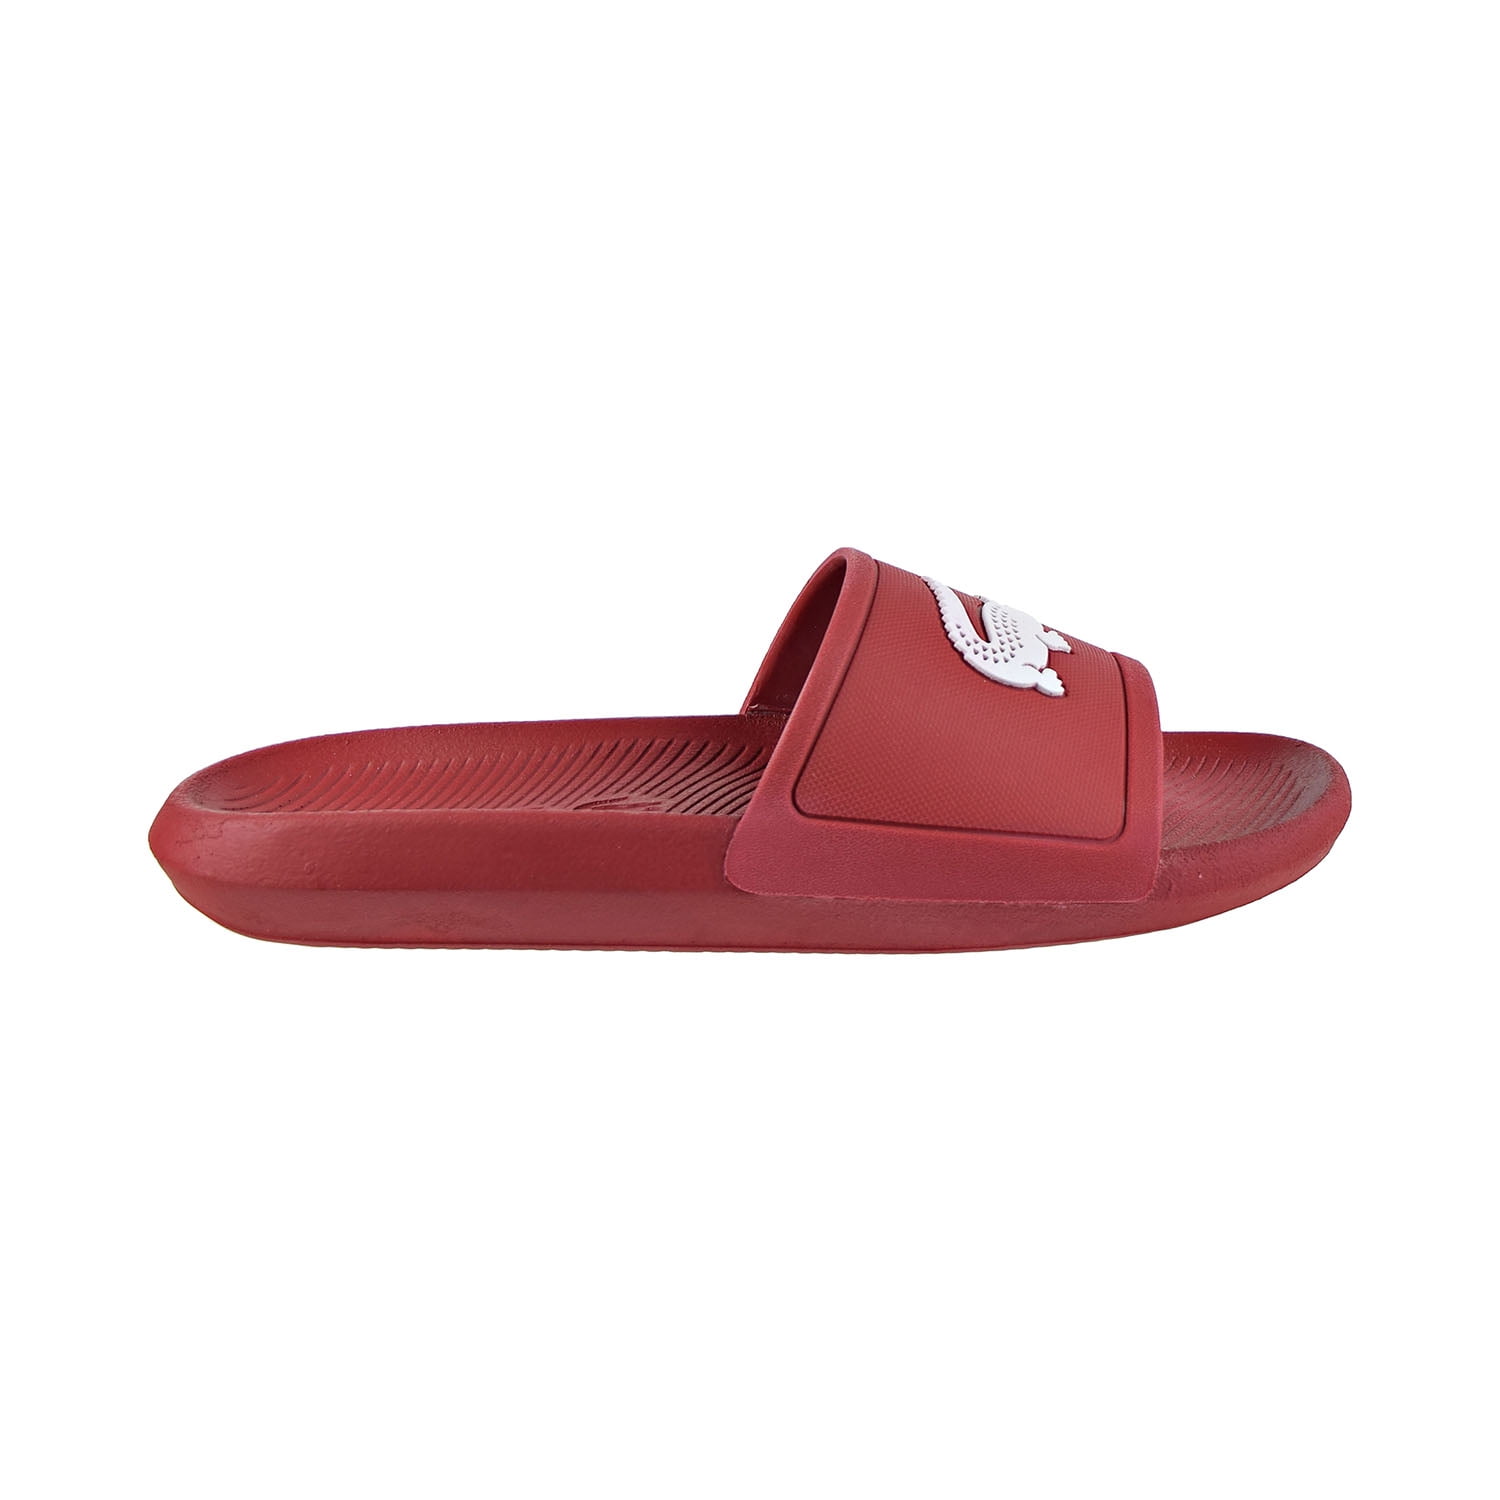 red chief sandal chappal